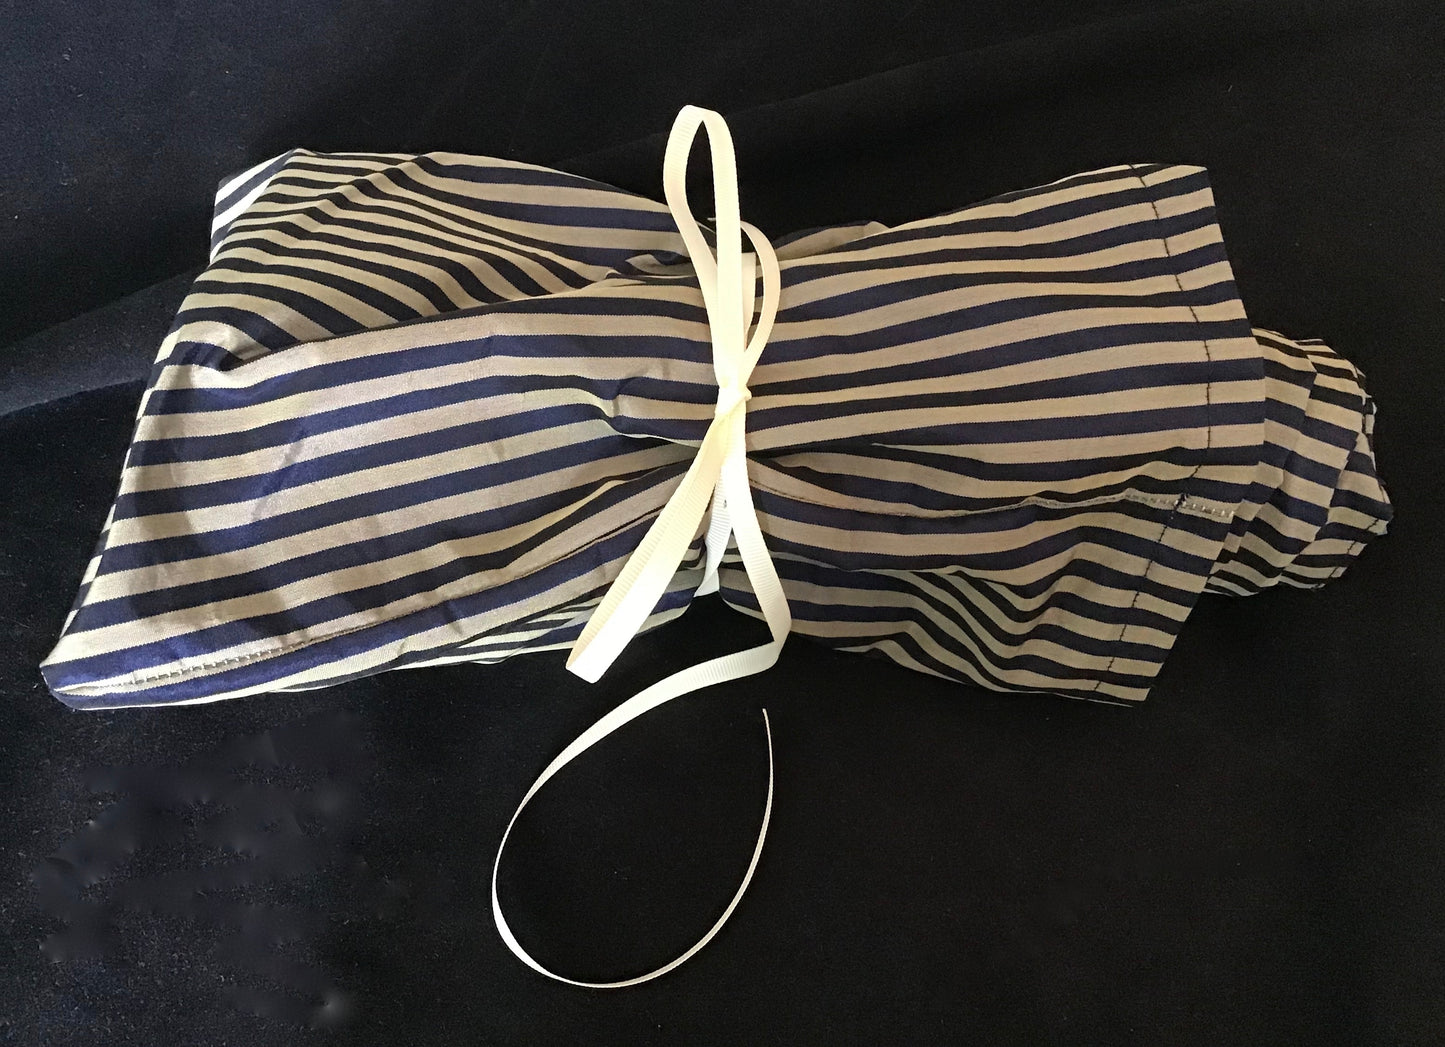 Original Twisturban® in tan/ navy poly stripe